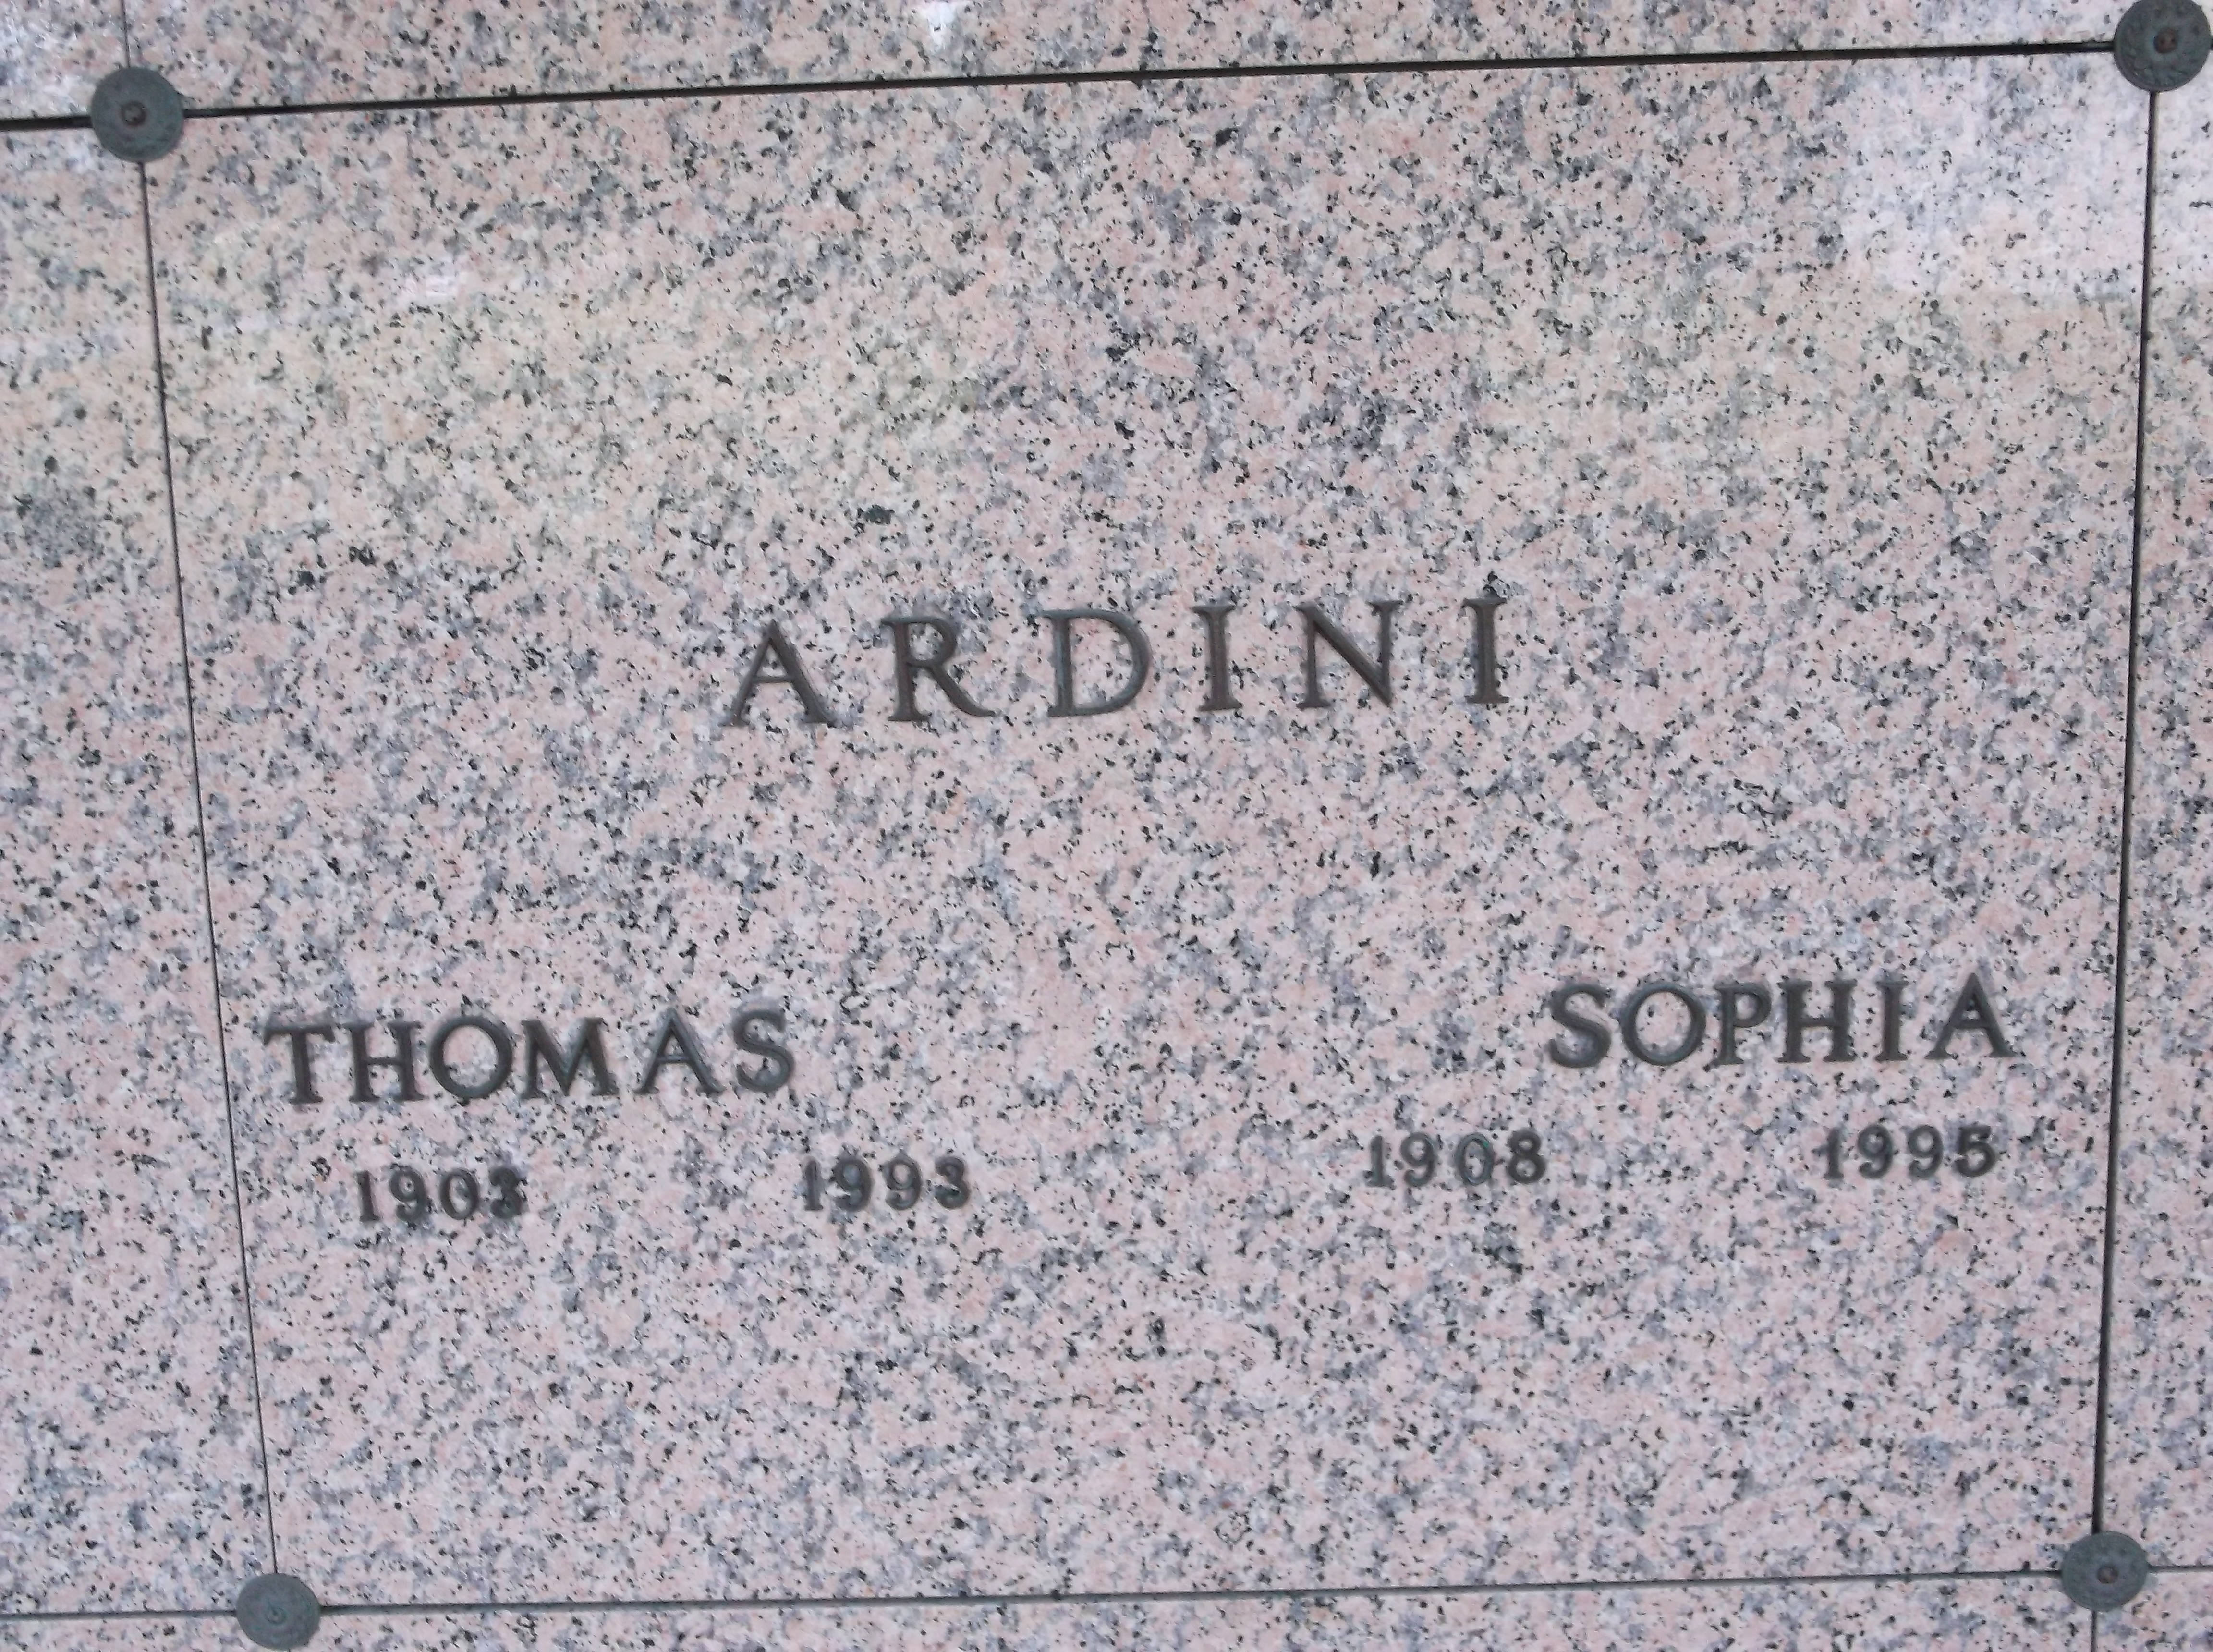 Sophia Ardini